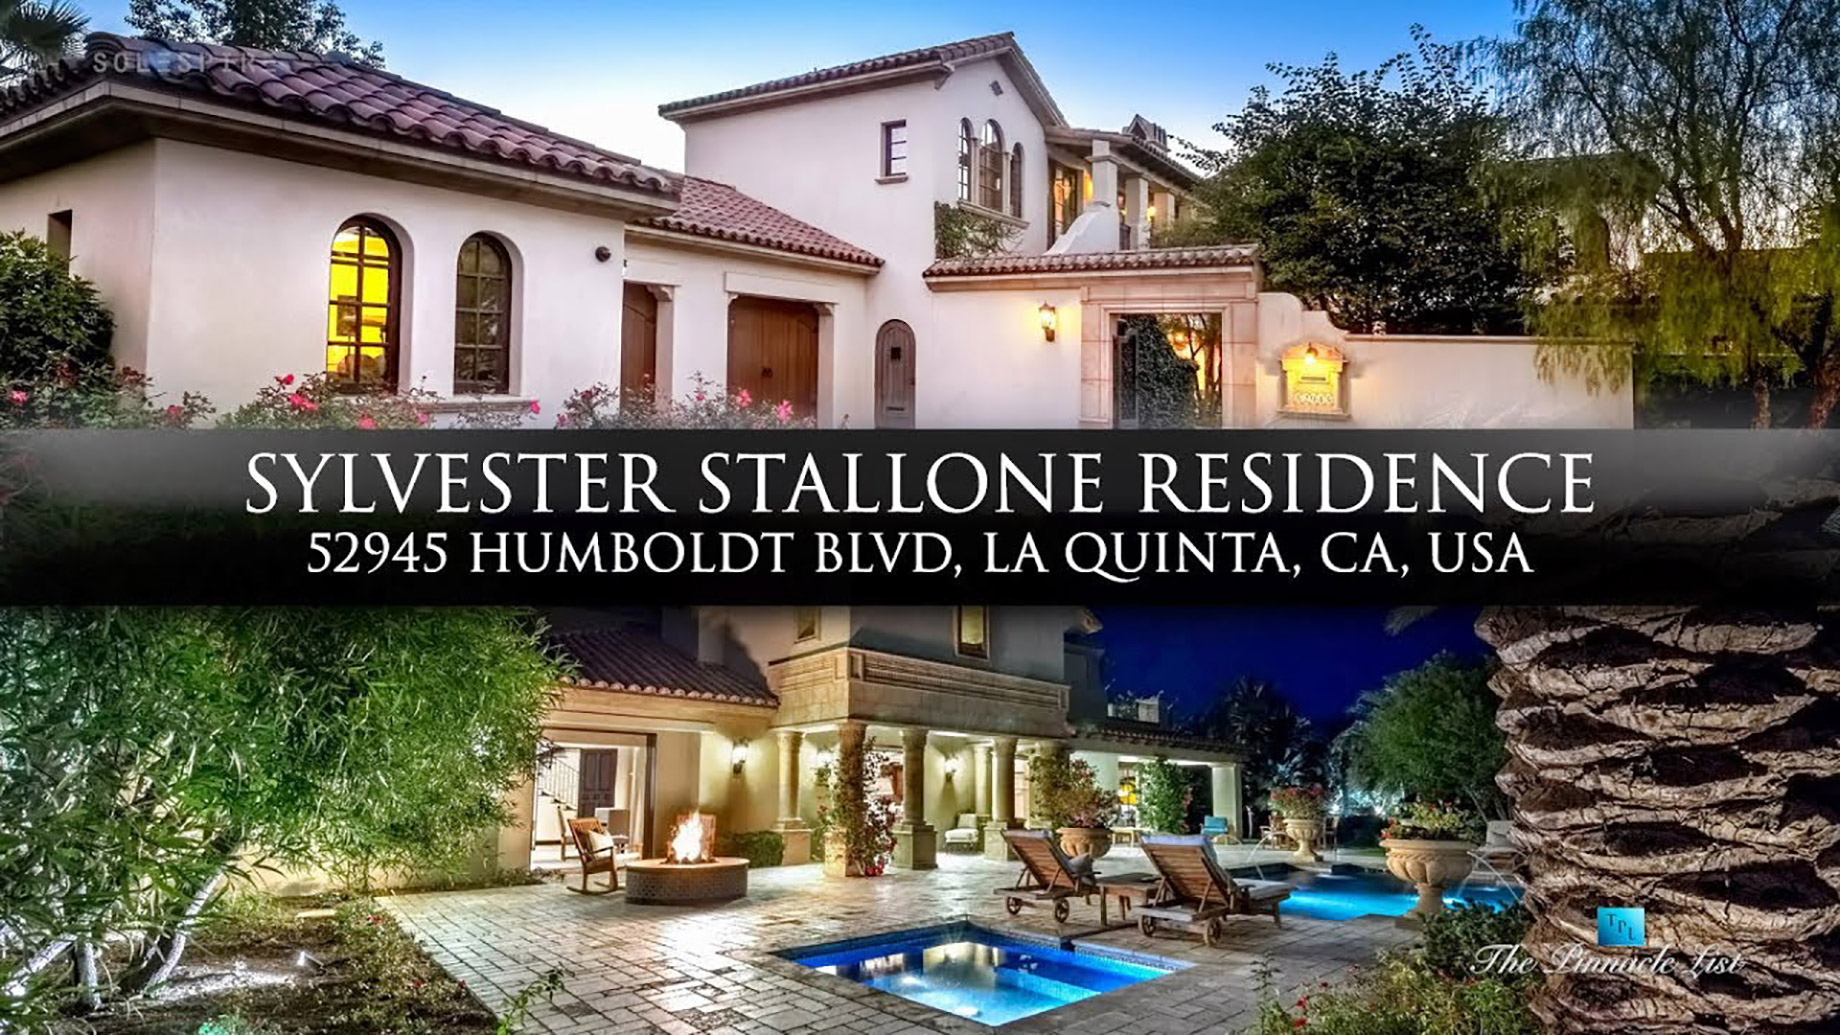 Sylvester Stallone Residence - 52945 Humboldt Blvd, La Quinta, CA, USA - Luxury Real Estate